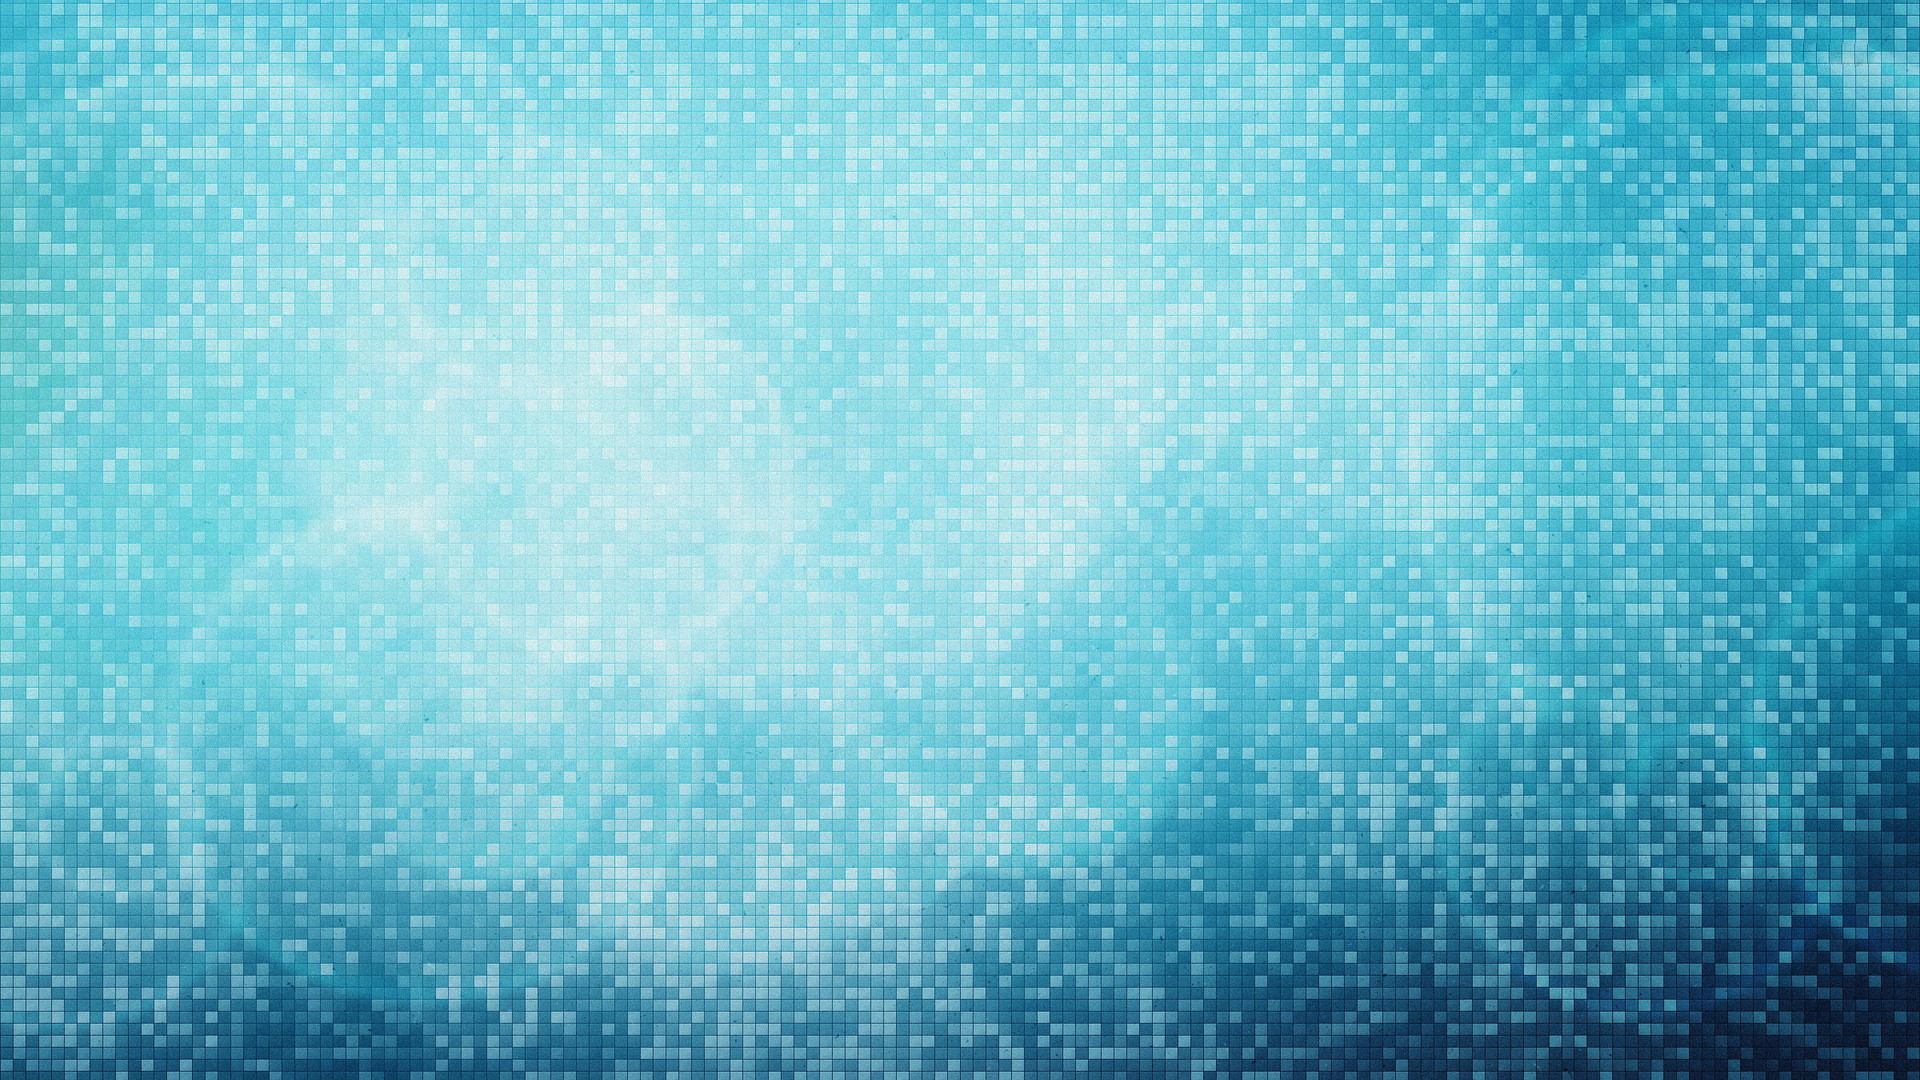 1920x1080 ... aolid light blue high resolution wallpaper download background ...